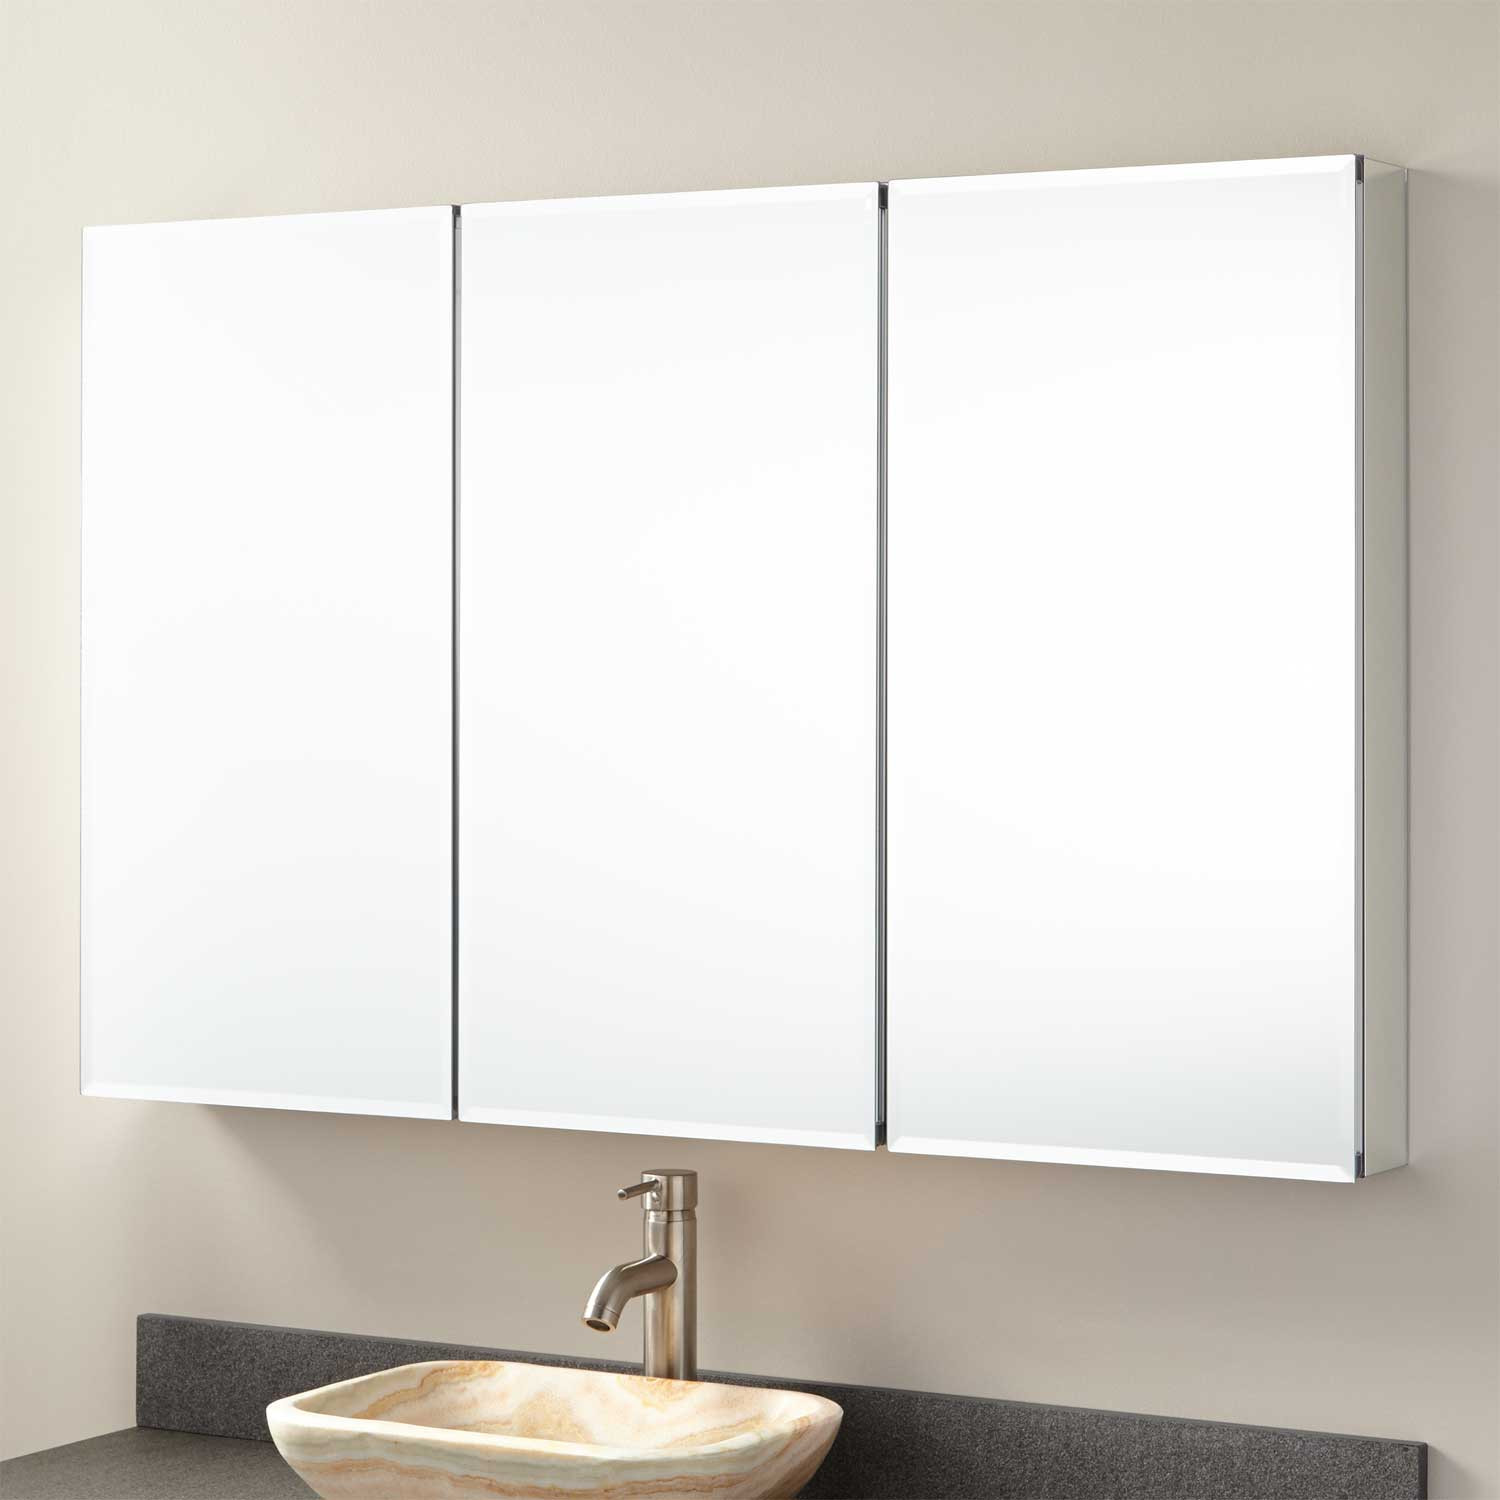 Mirrored Bathroom Medicine Cabinet
 Acwel Recessed Mount Medicine Cabinet with Mirror Bathroom